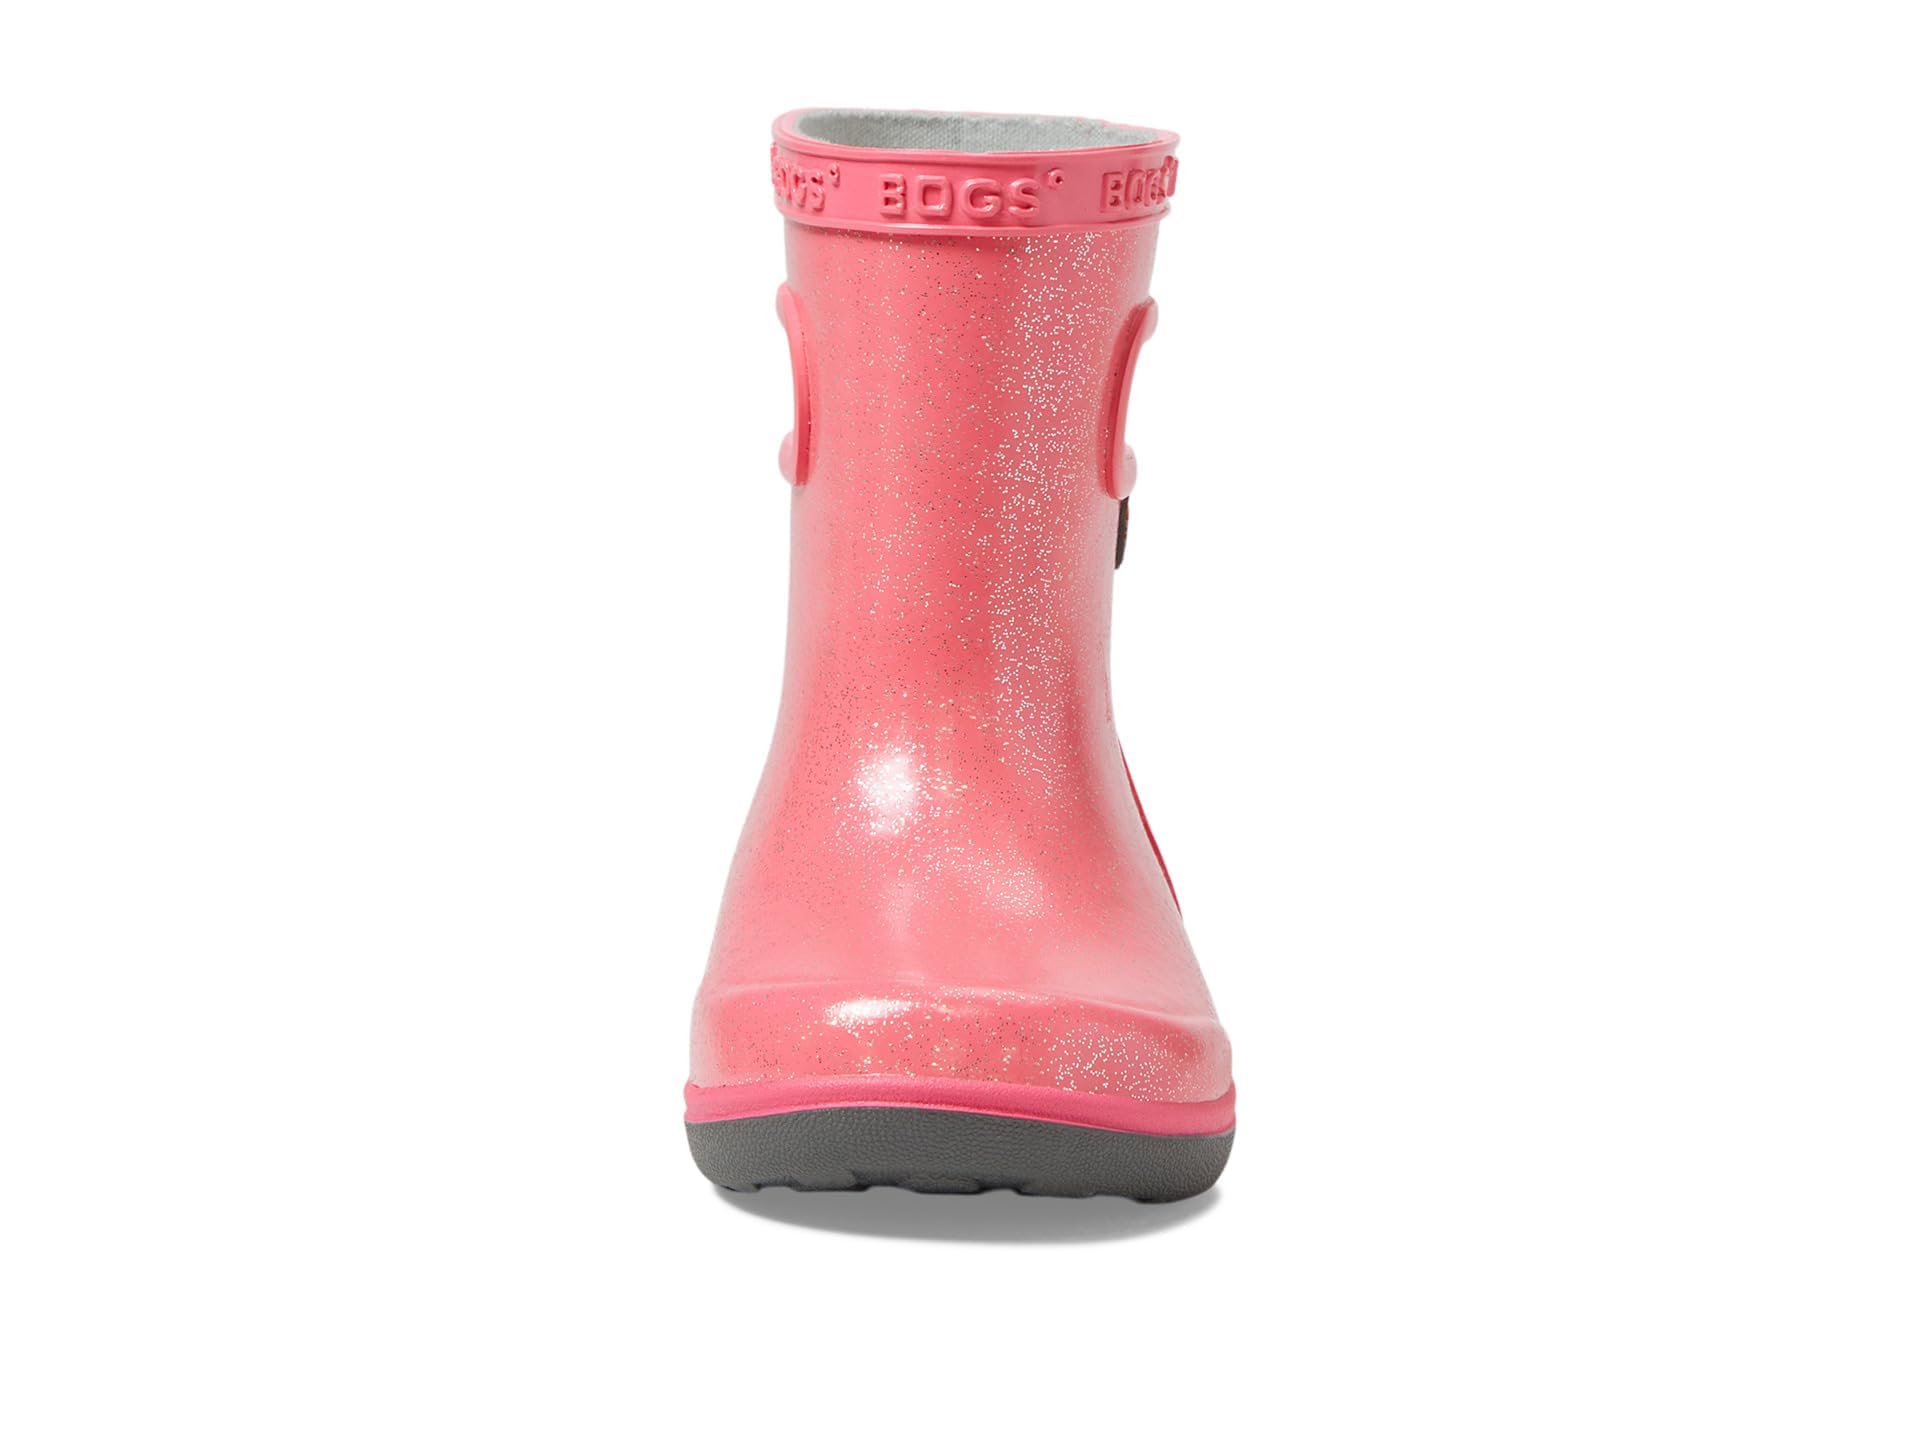 Bogs Girls Kids' Skipper II Rain Boot, Pink, 4 Toddler